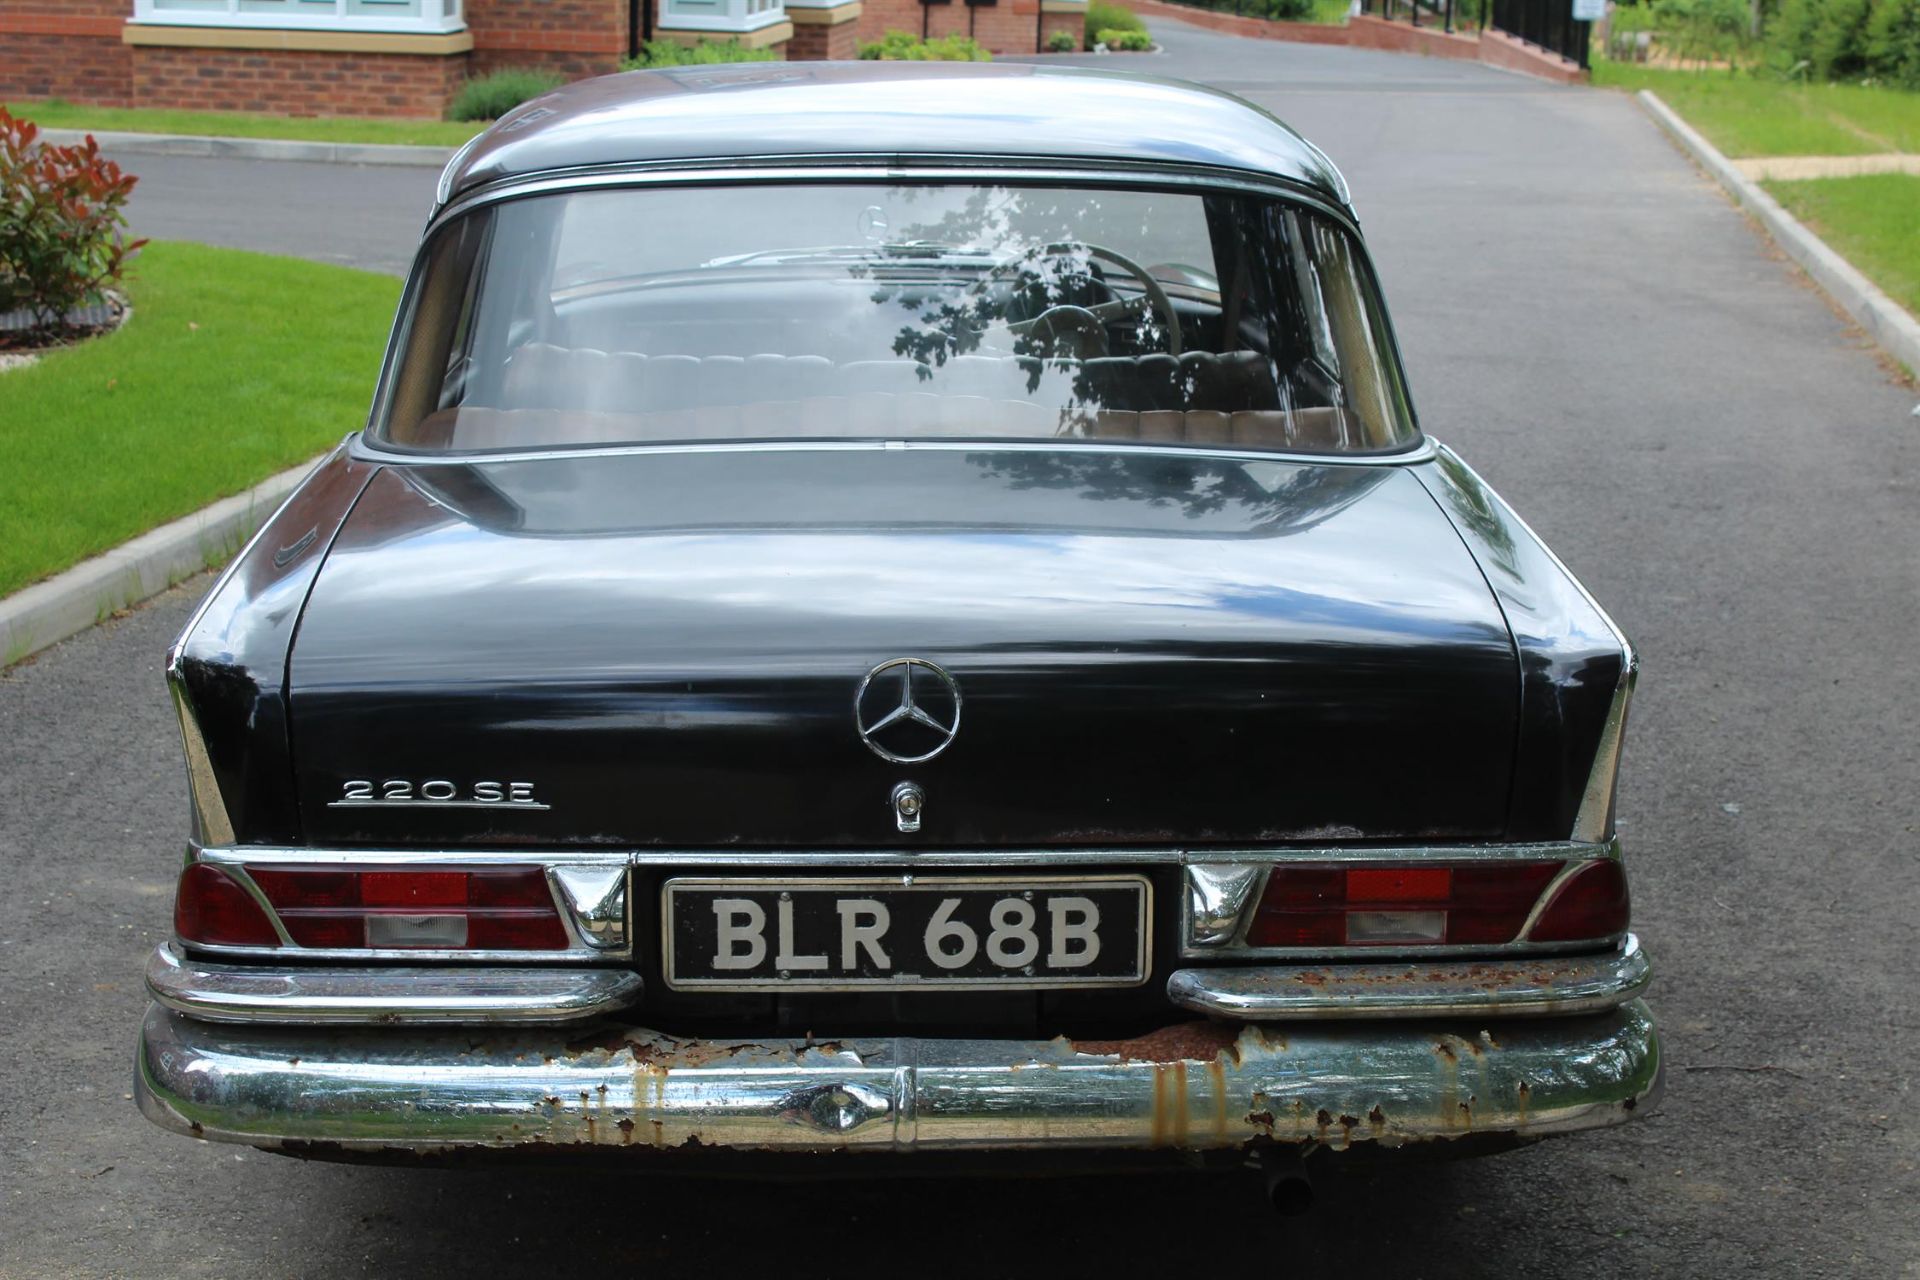 1961 Mercedes 220SEB - Image 3 of 4